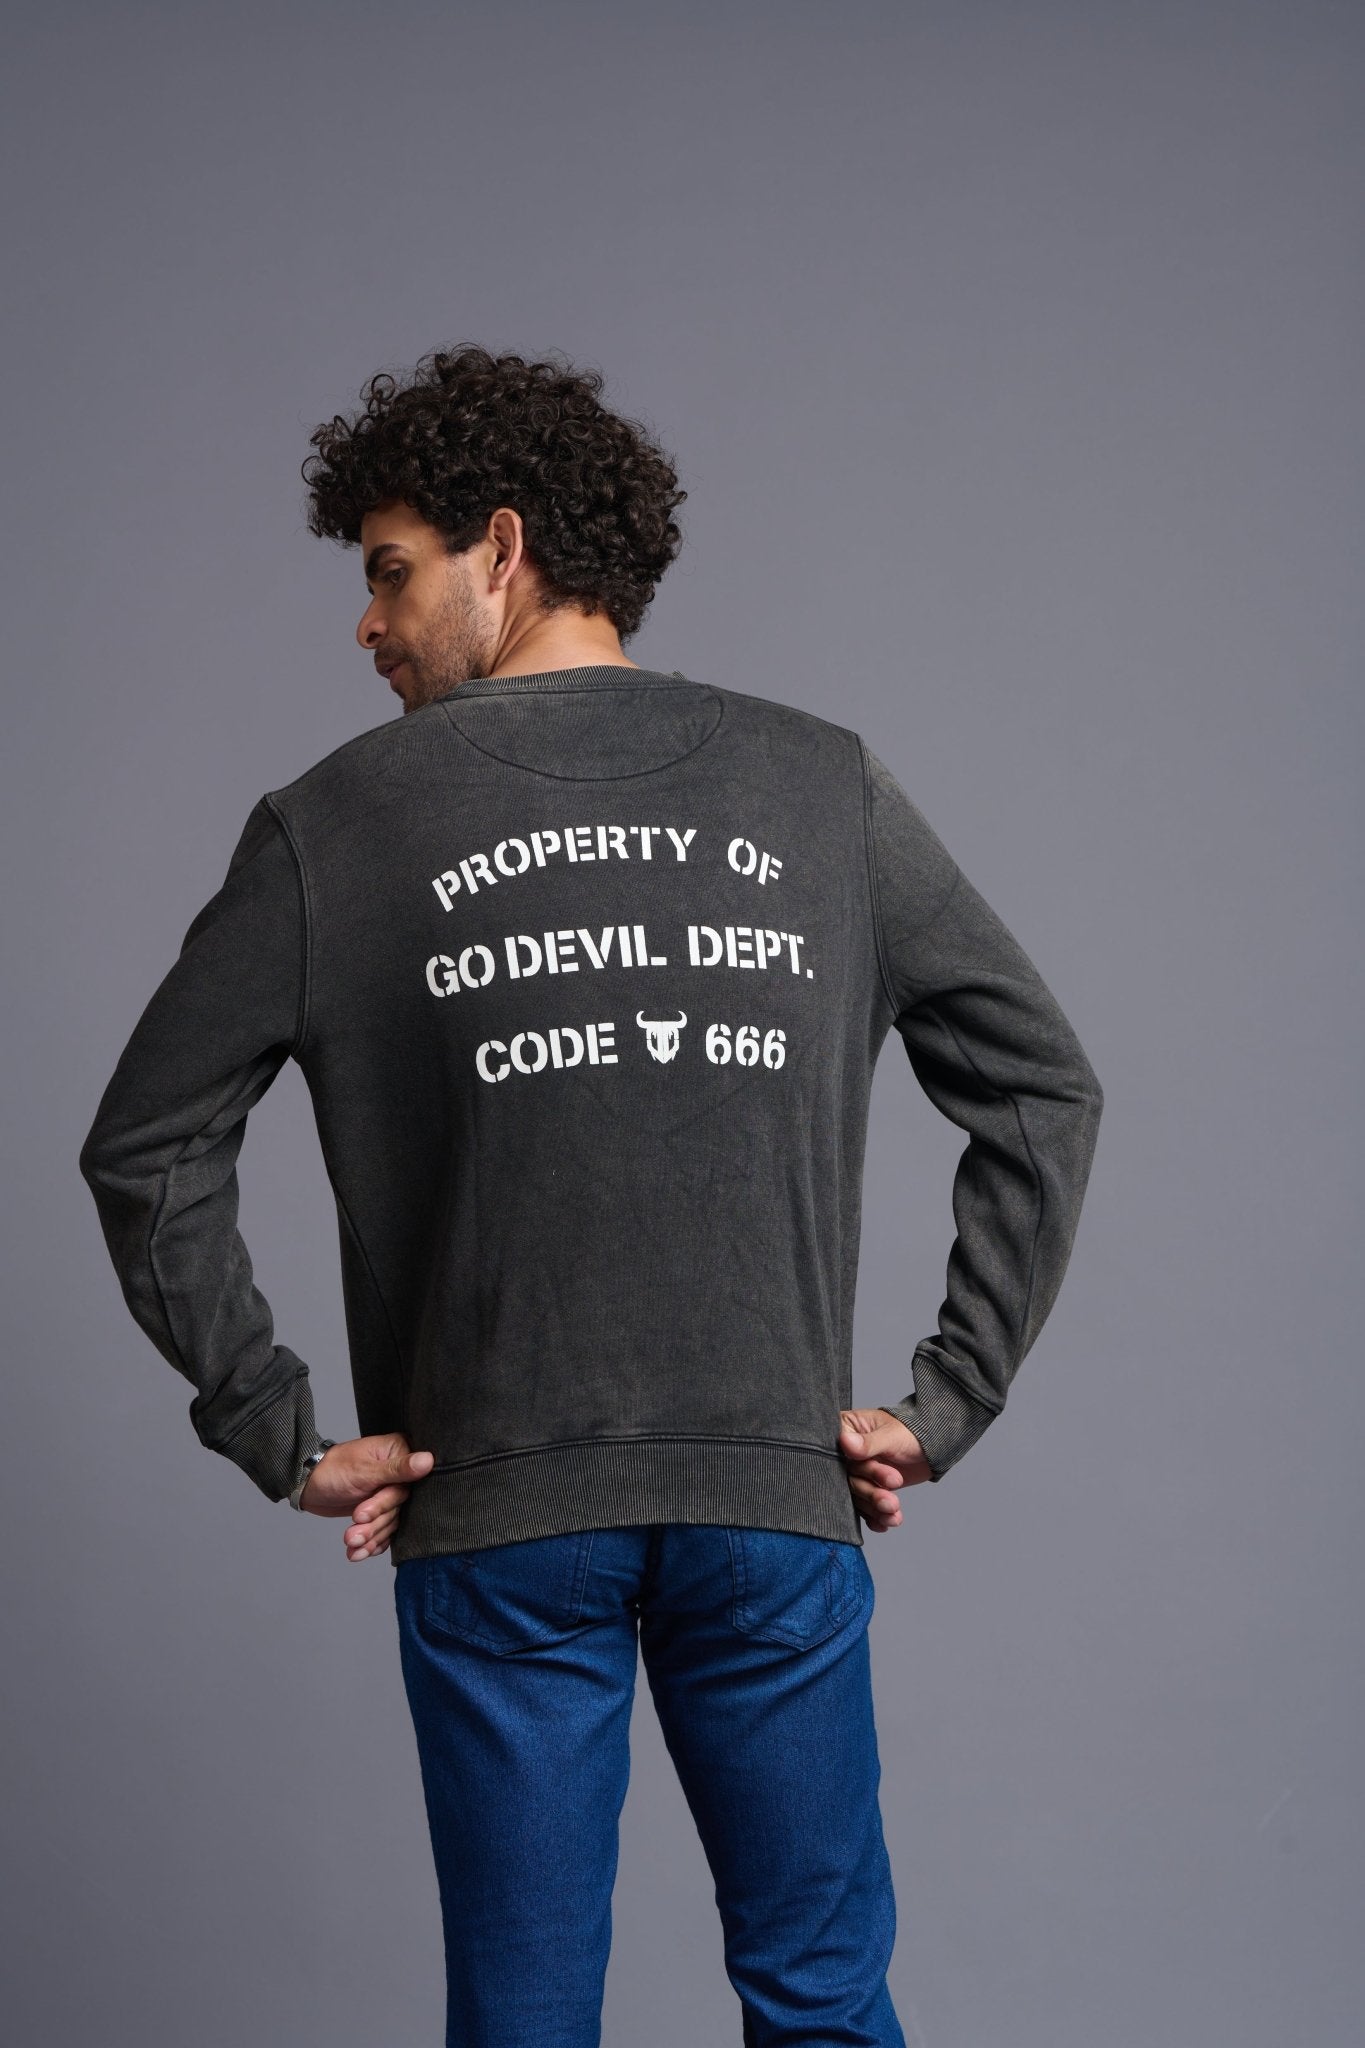 Go Devil Dept. Printed Black Sweatshirt for Men - Go Devil